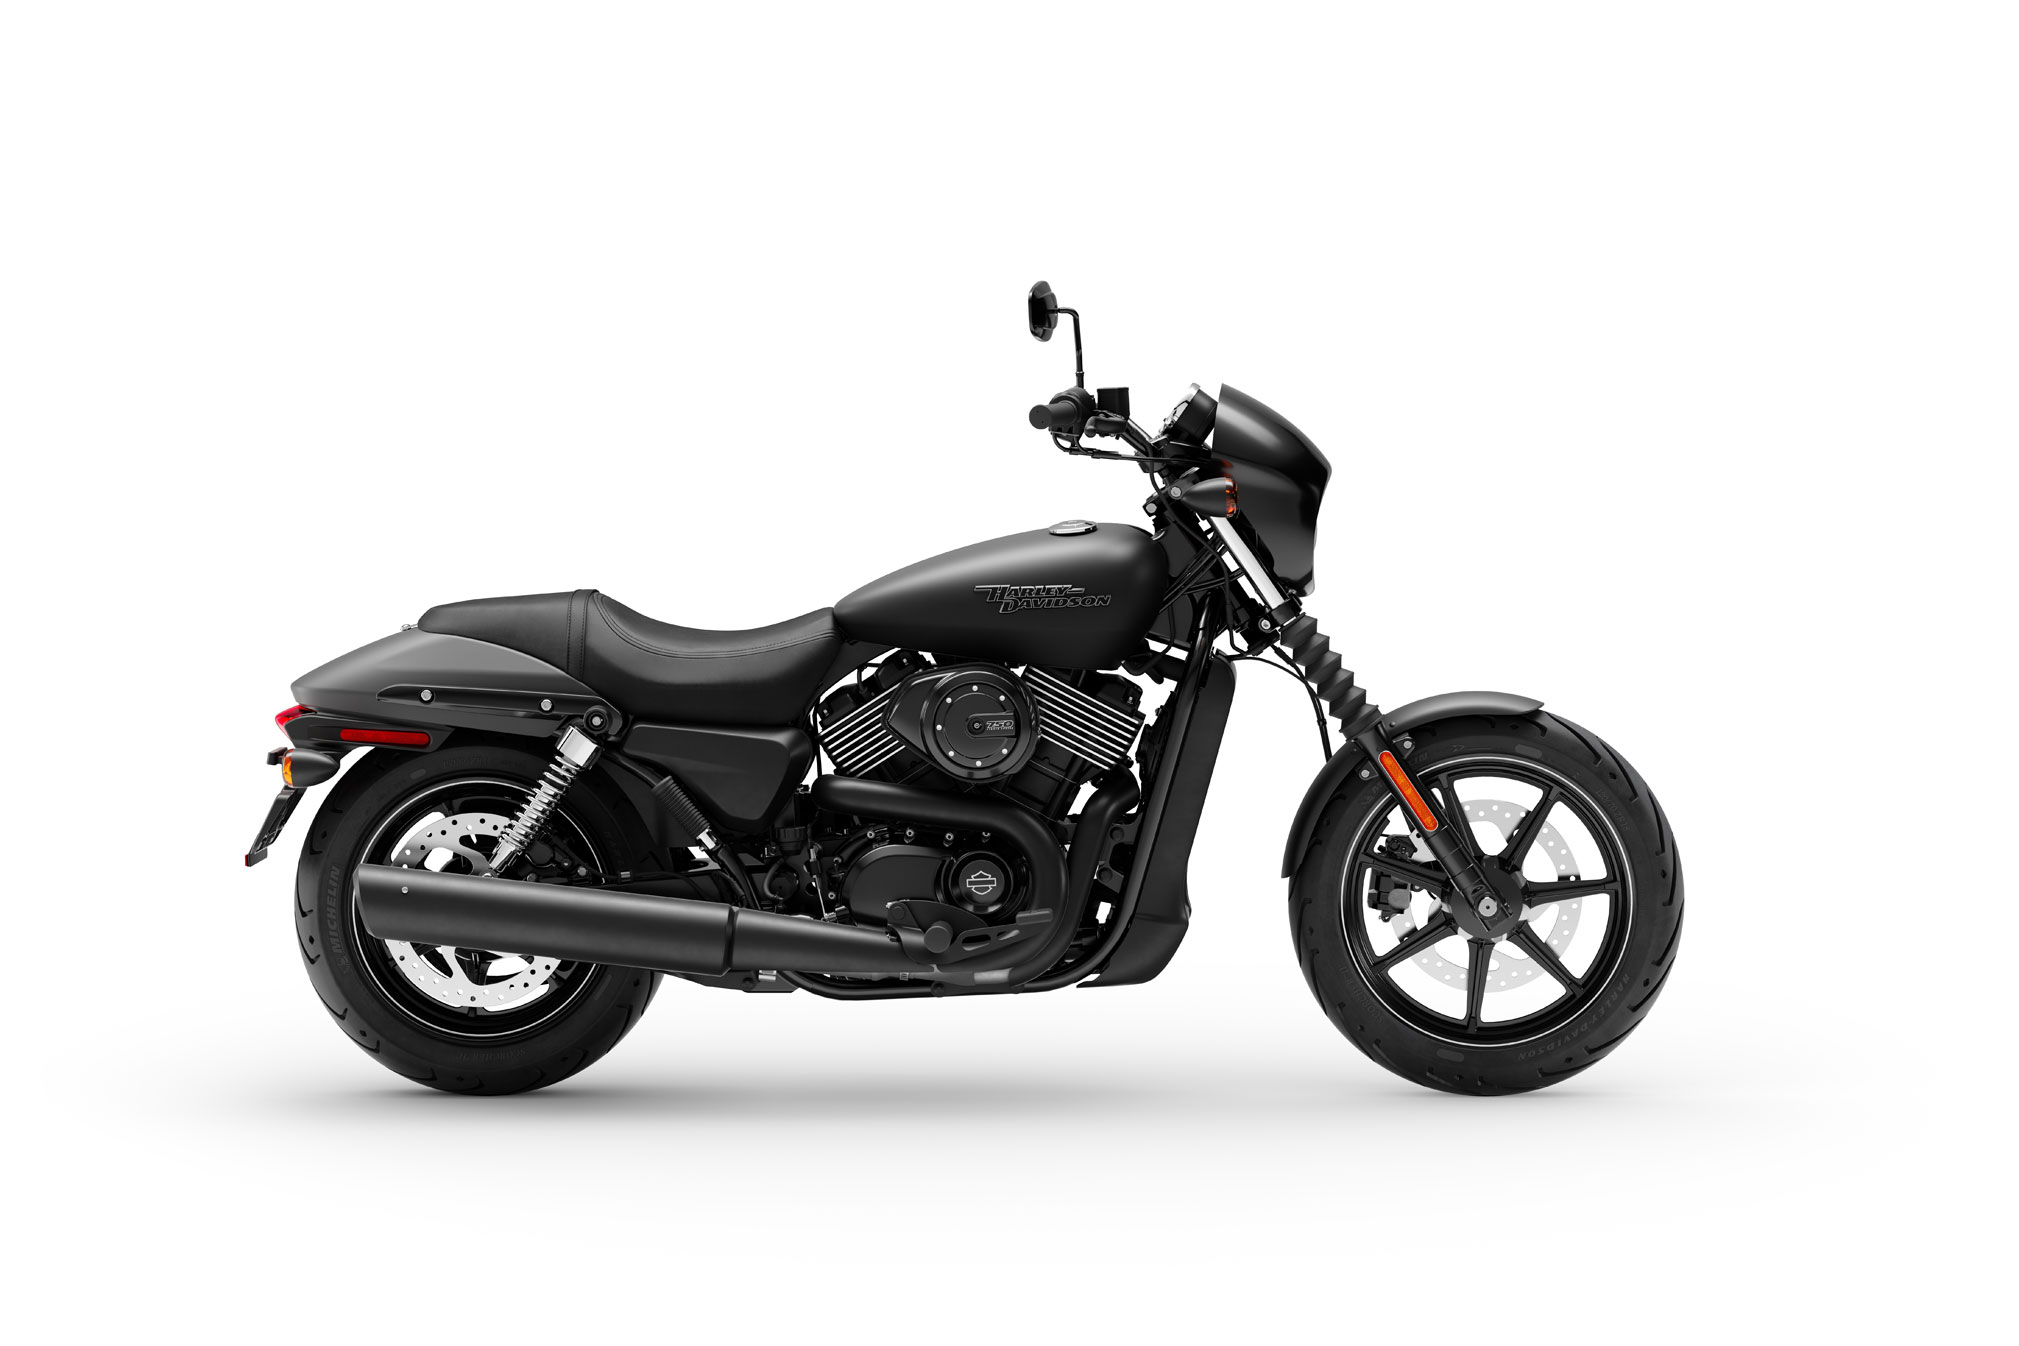  2019 Harley Davidson Street 750 Guide Total Motorcycle